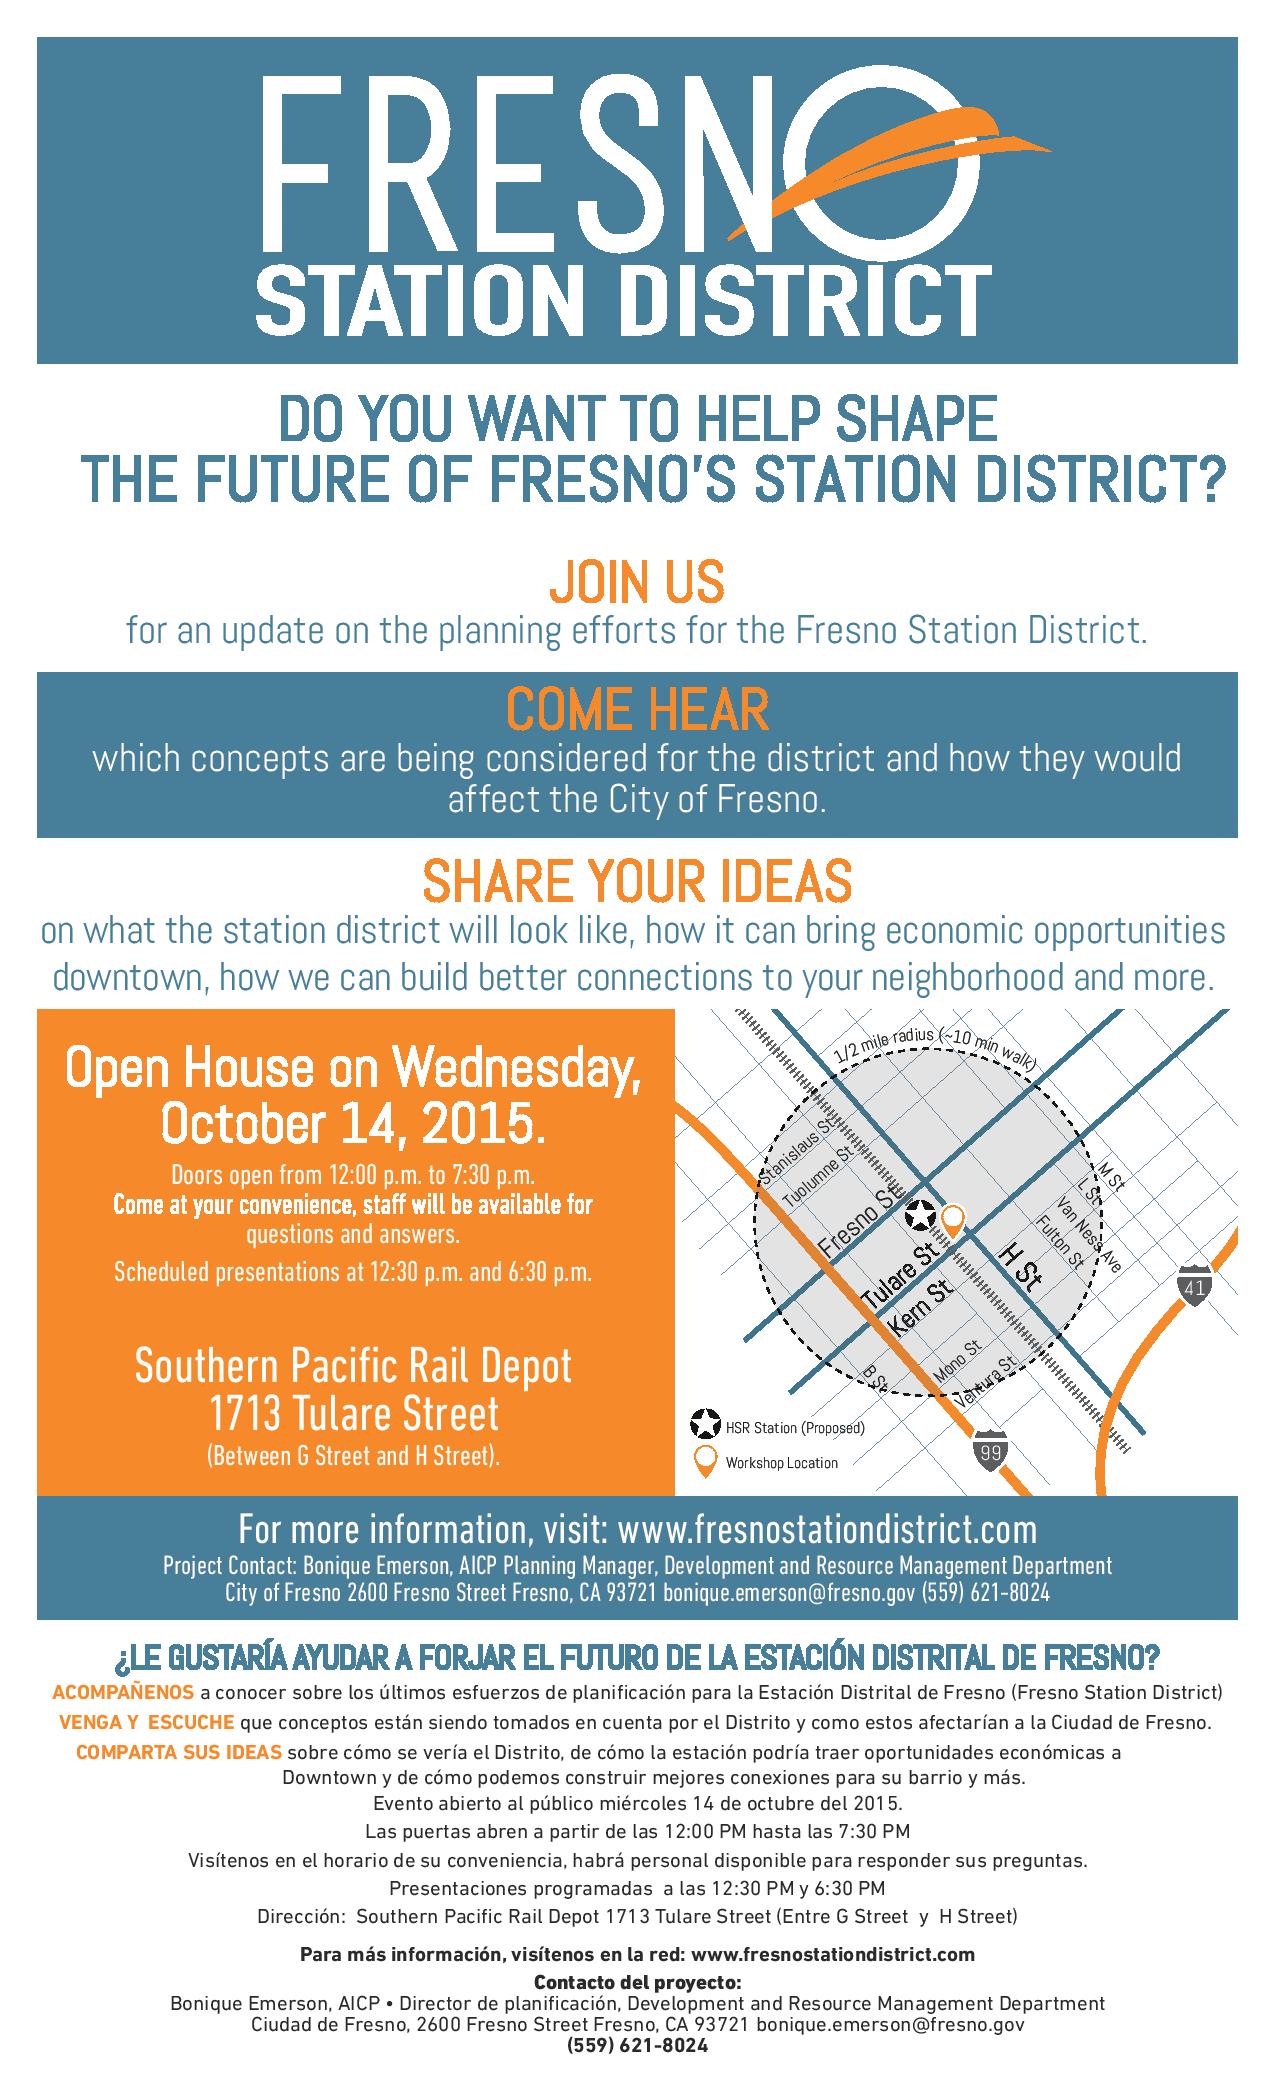 HSR: Fresno Station District open house Oct. 14